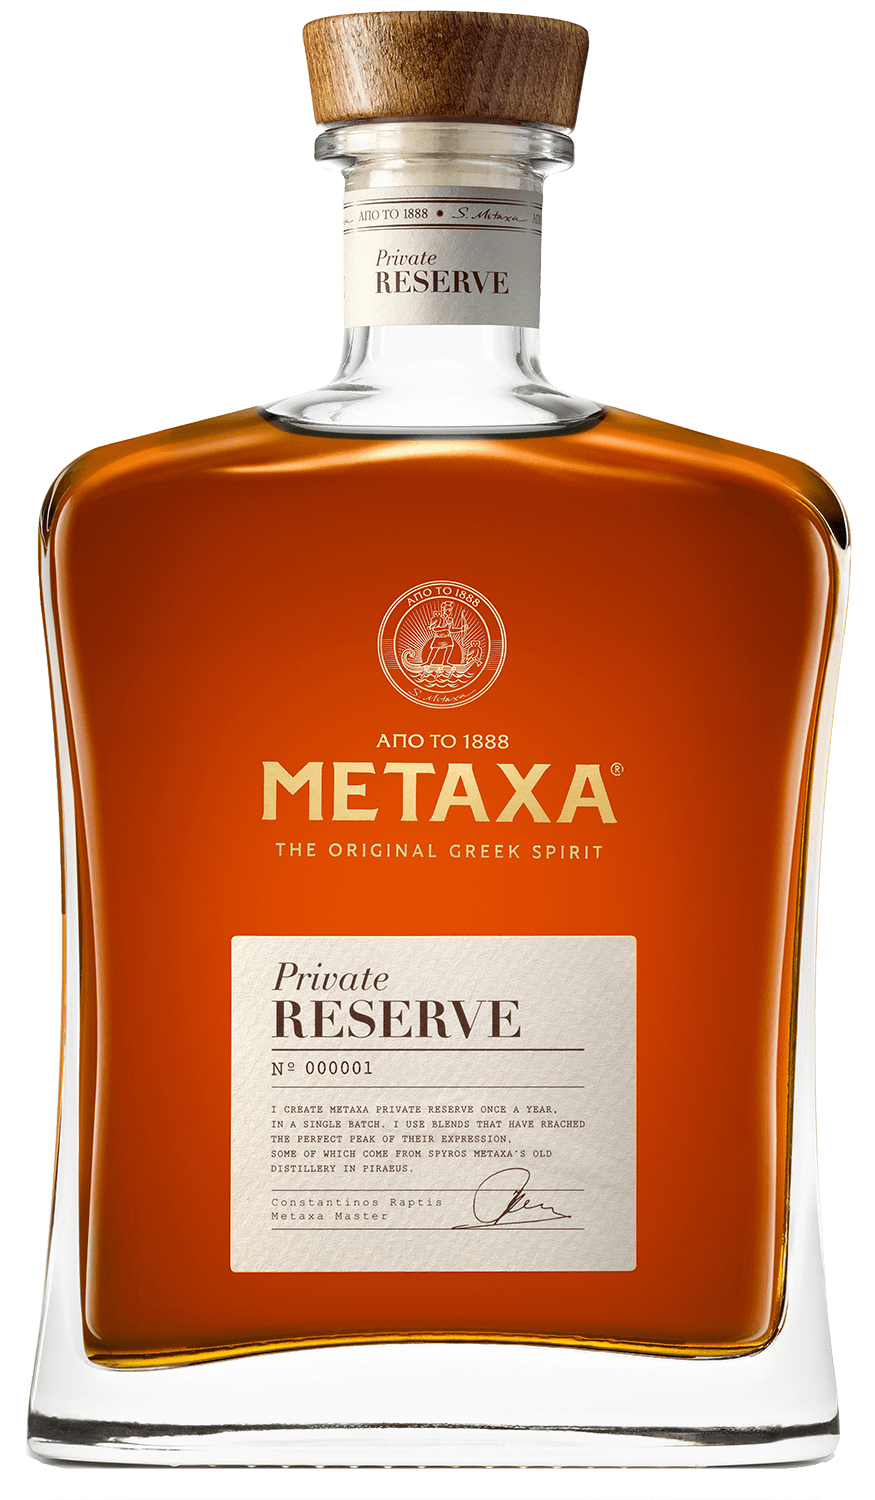 metaxa 5 stars gift box Brandy Metaxa Private Reserve (gift box)